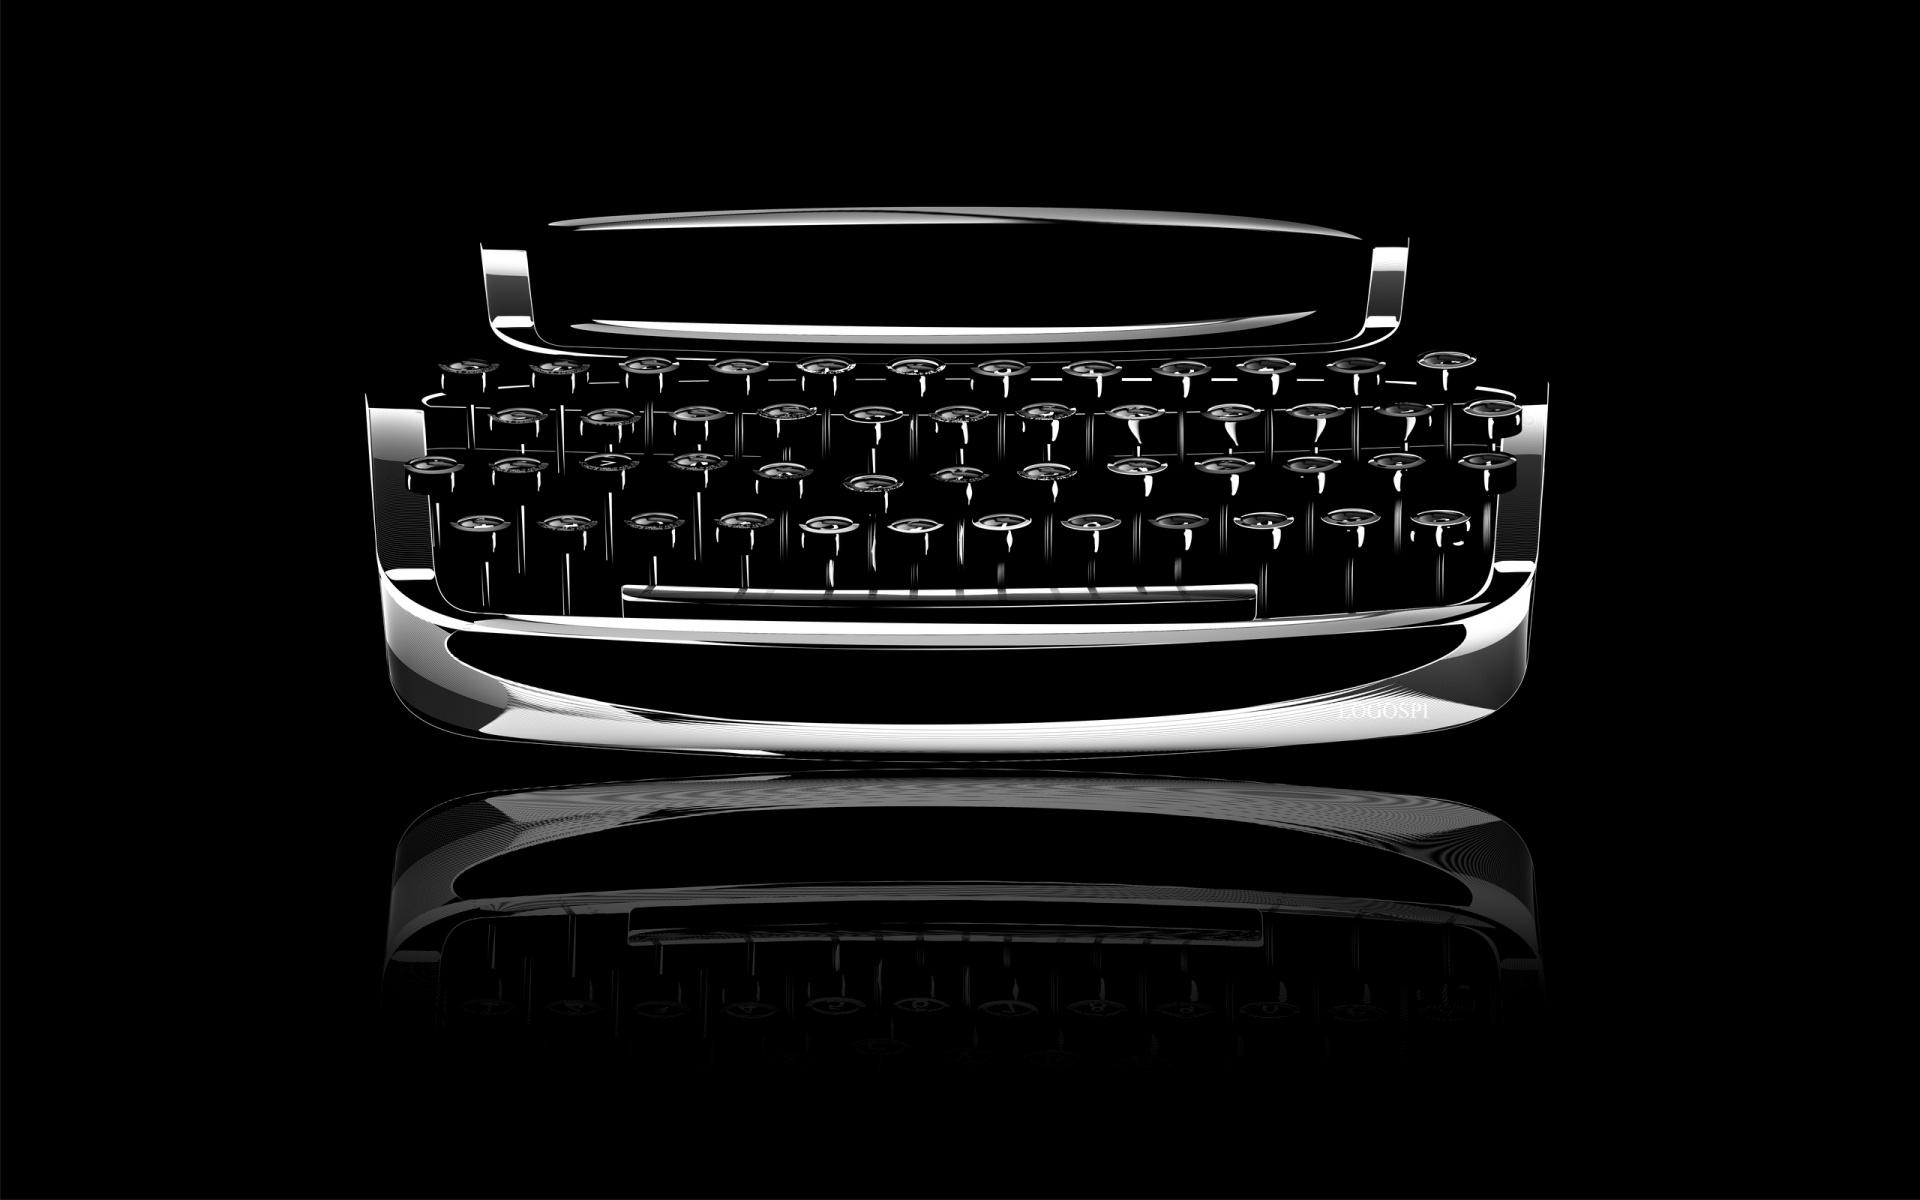 Typewriter wallpapers HD quality